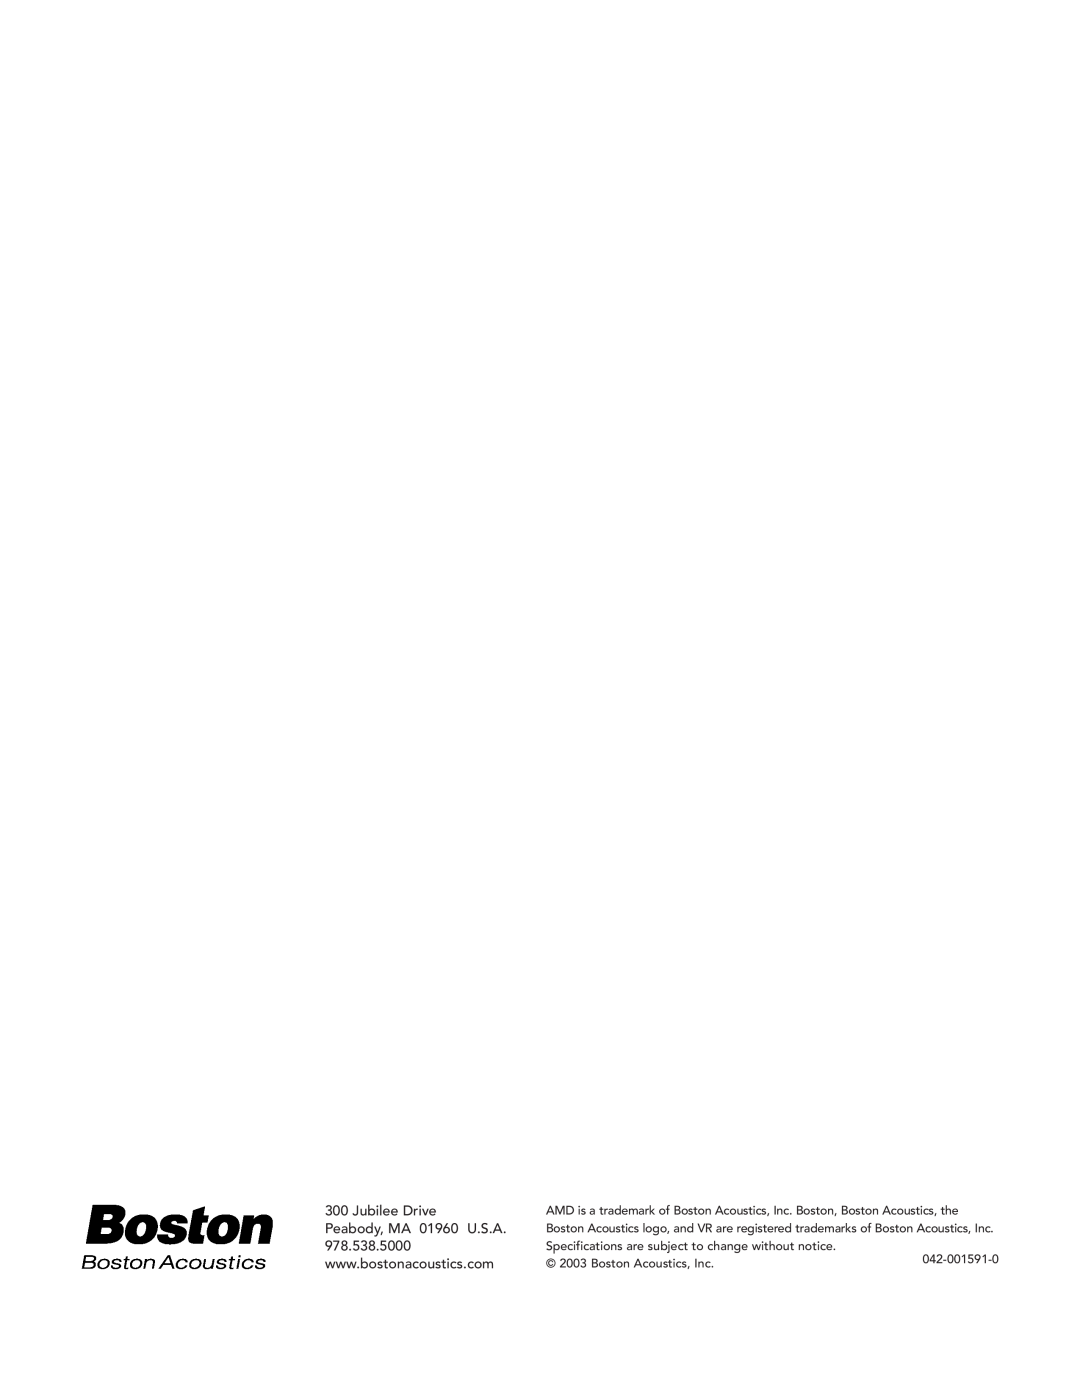 Boston Acoustics BT2, BT1 manual Jubilee Drive, Peabody, MA 01960 U.S.A, 978.538.5000, 042-001591-0, Boston Acoustics, Inc 